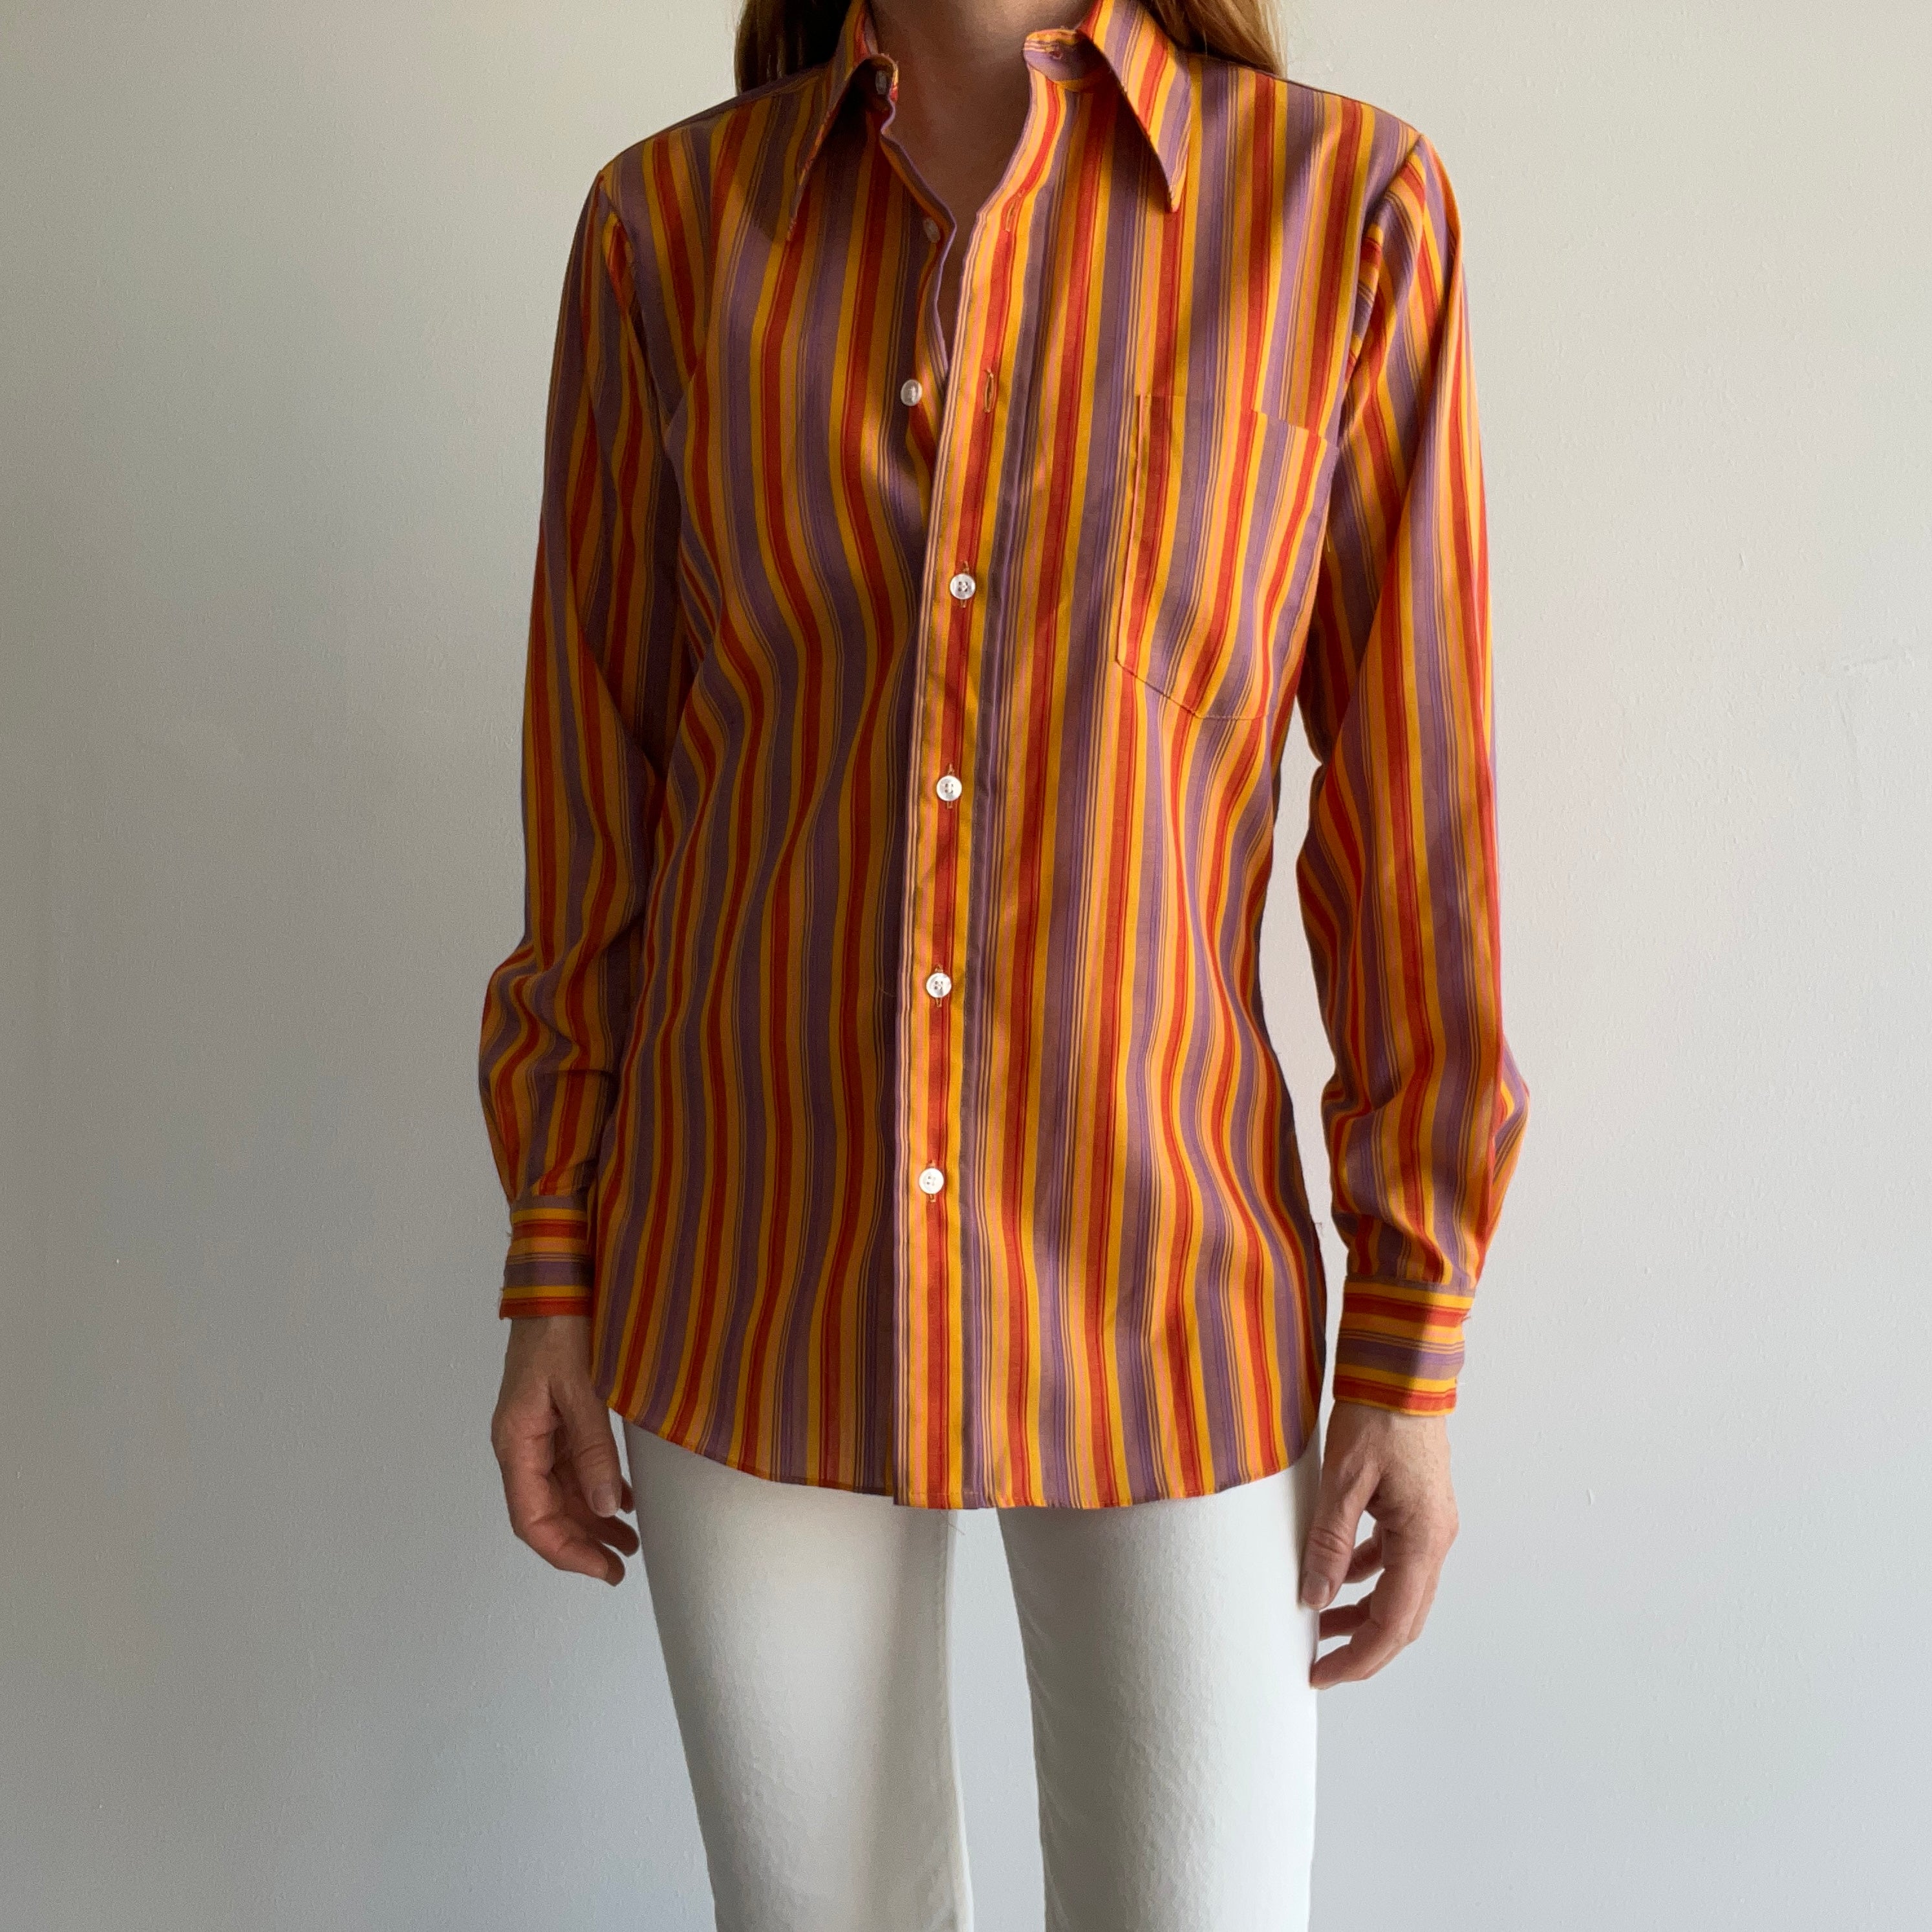 1970s Orange Vertical Stipe Button Up Blouse/Shirt - WOW